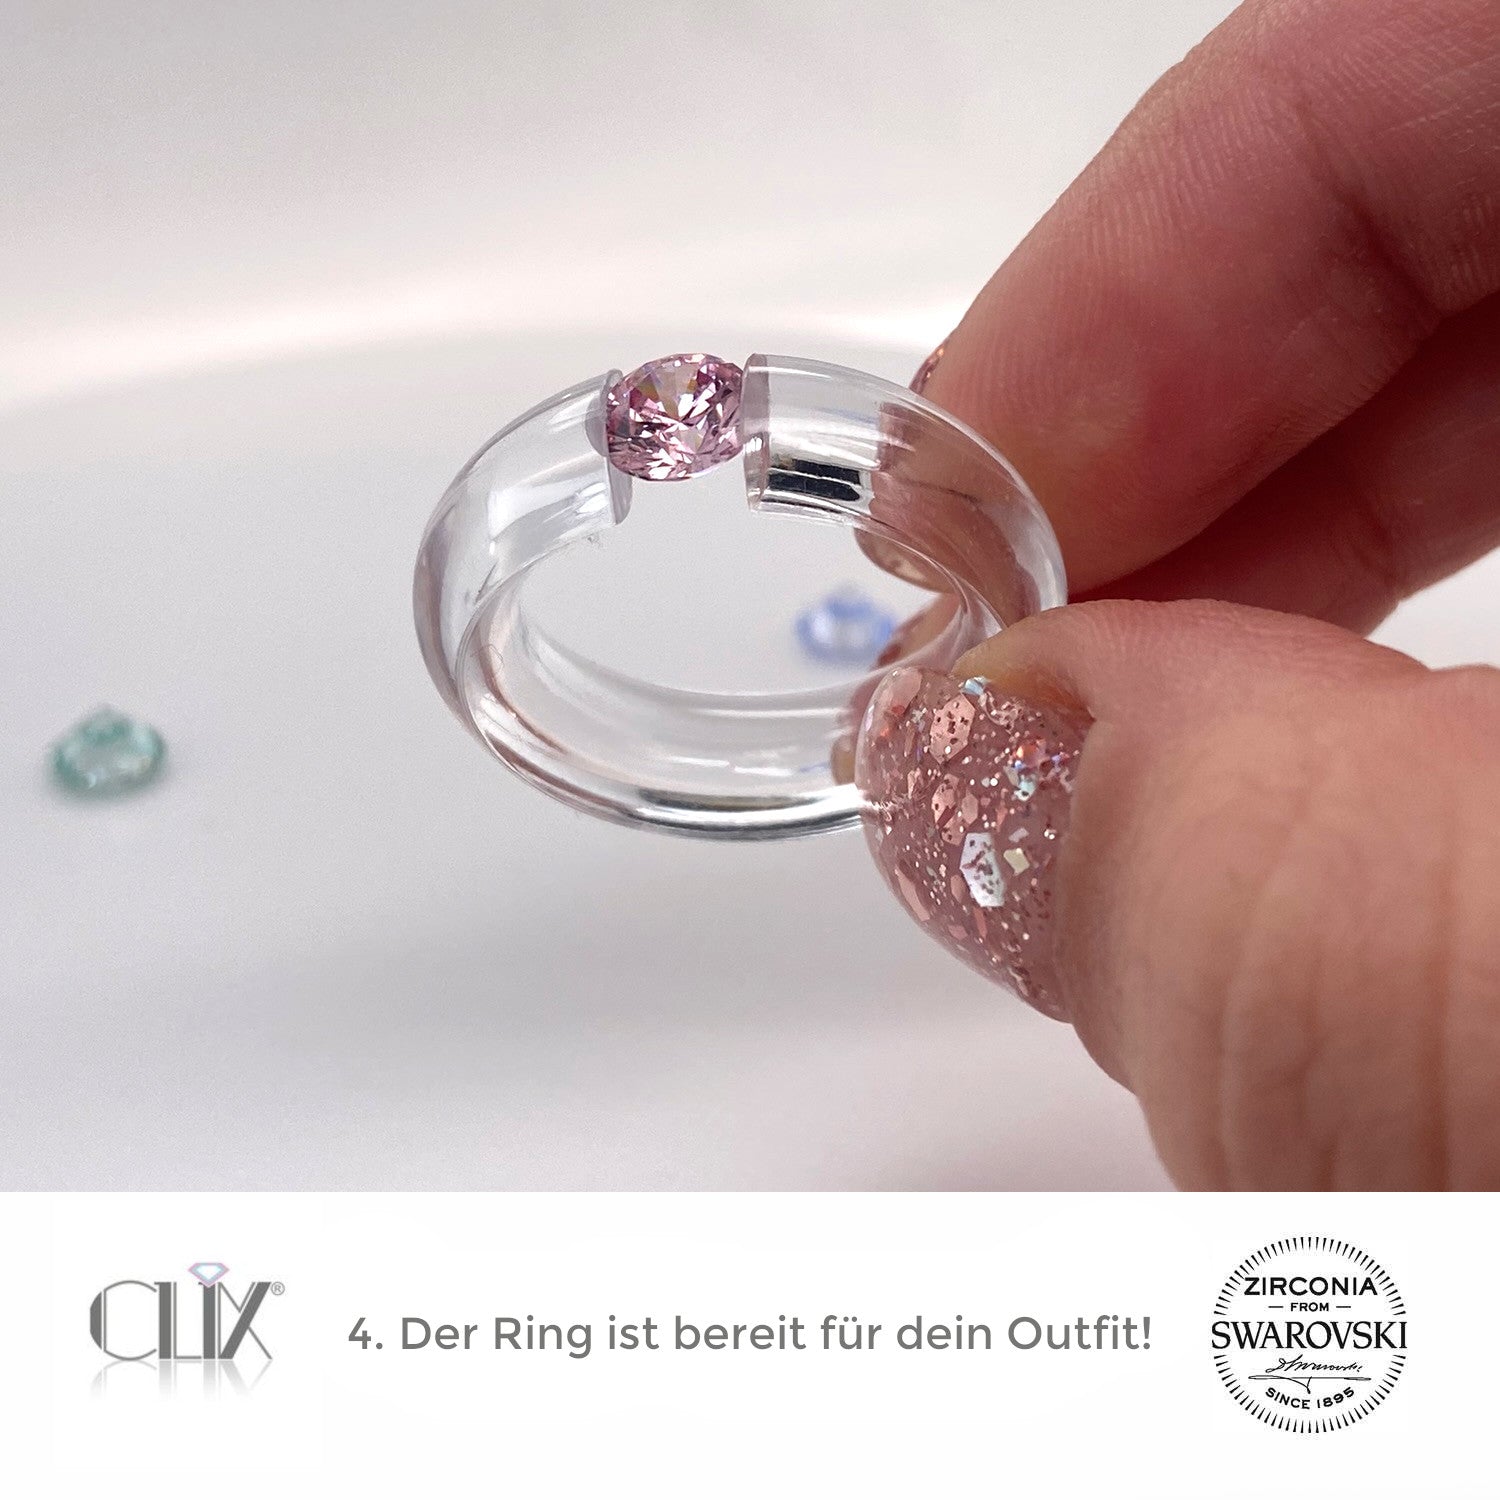 CLIX© | 1 crystal ring including 5 Swarovski zirconia